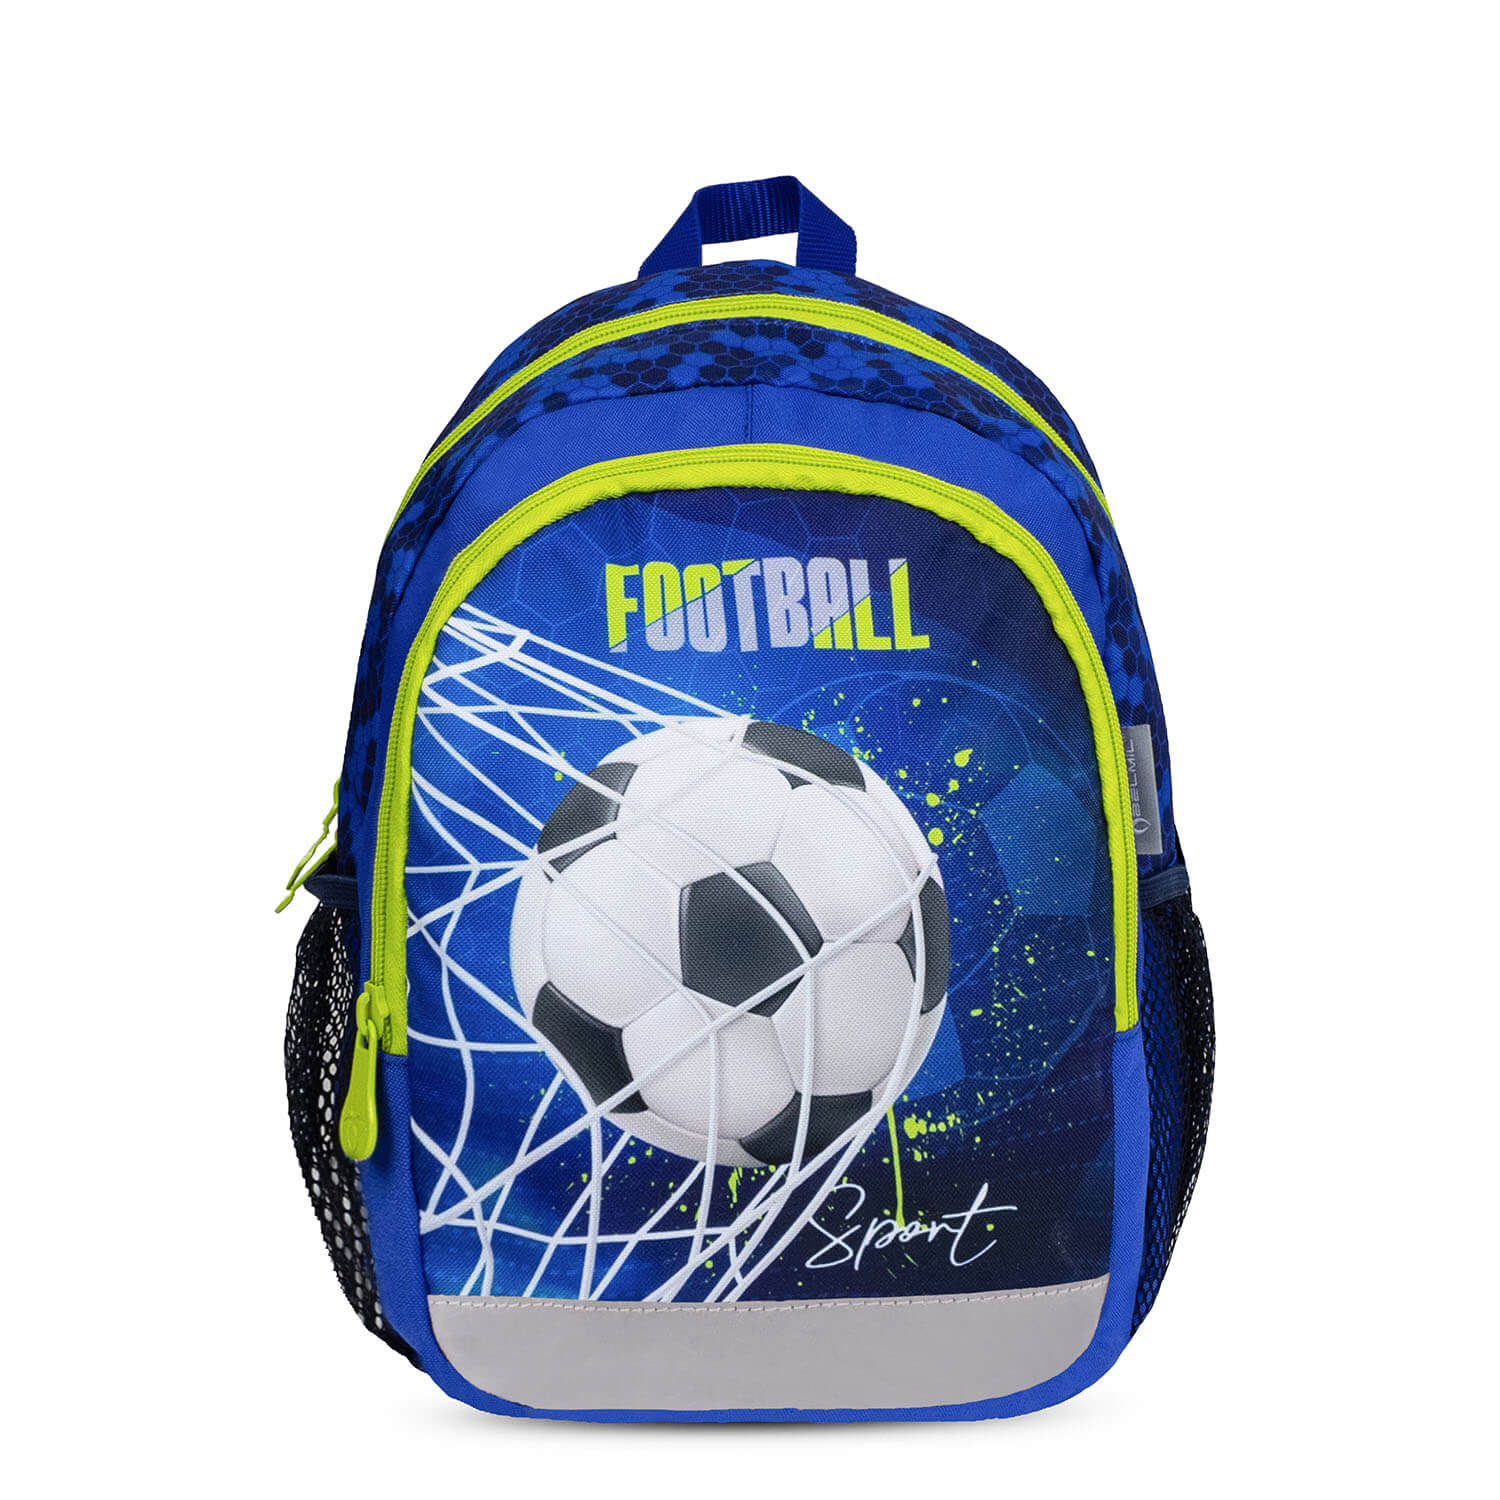 Kiddy Plus Football Sport Kindergarten Bag with GRATIS Storage box